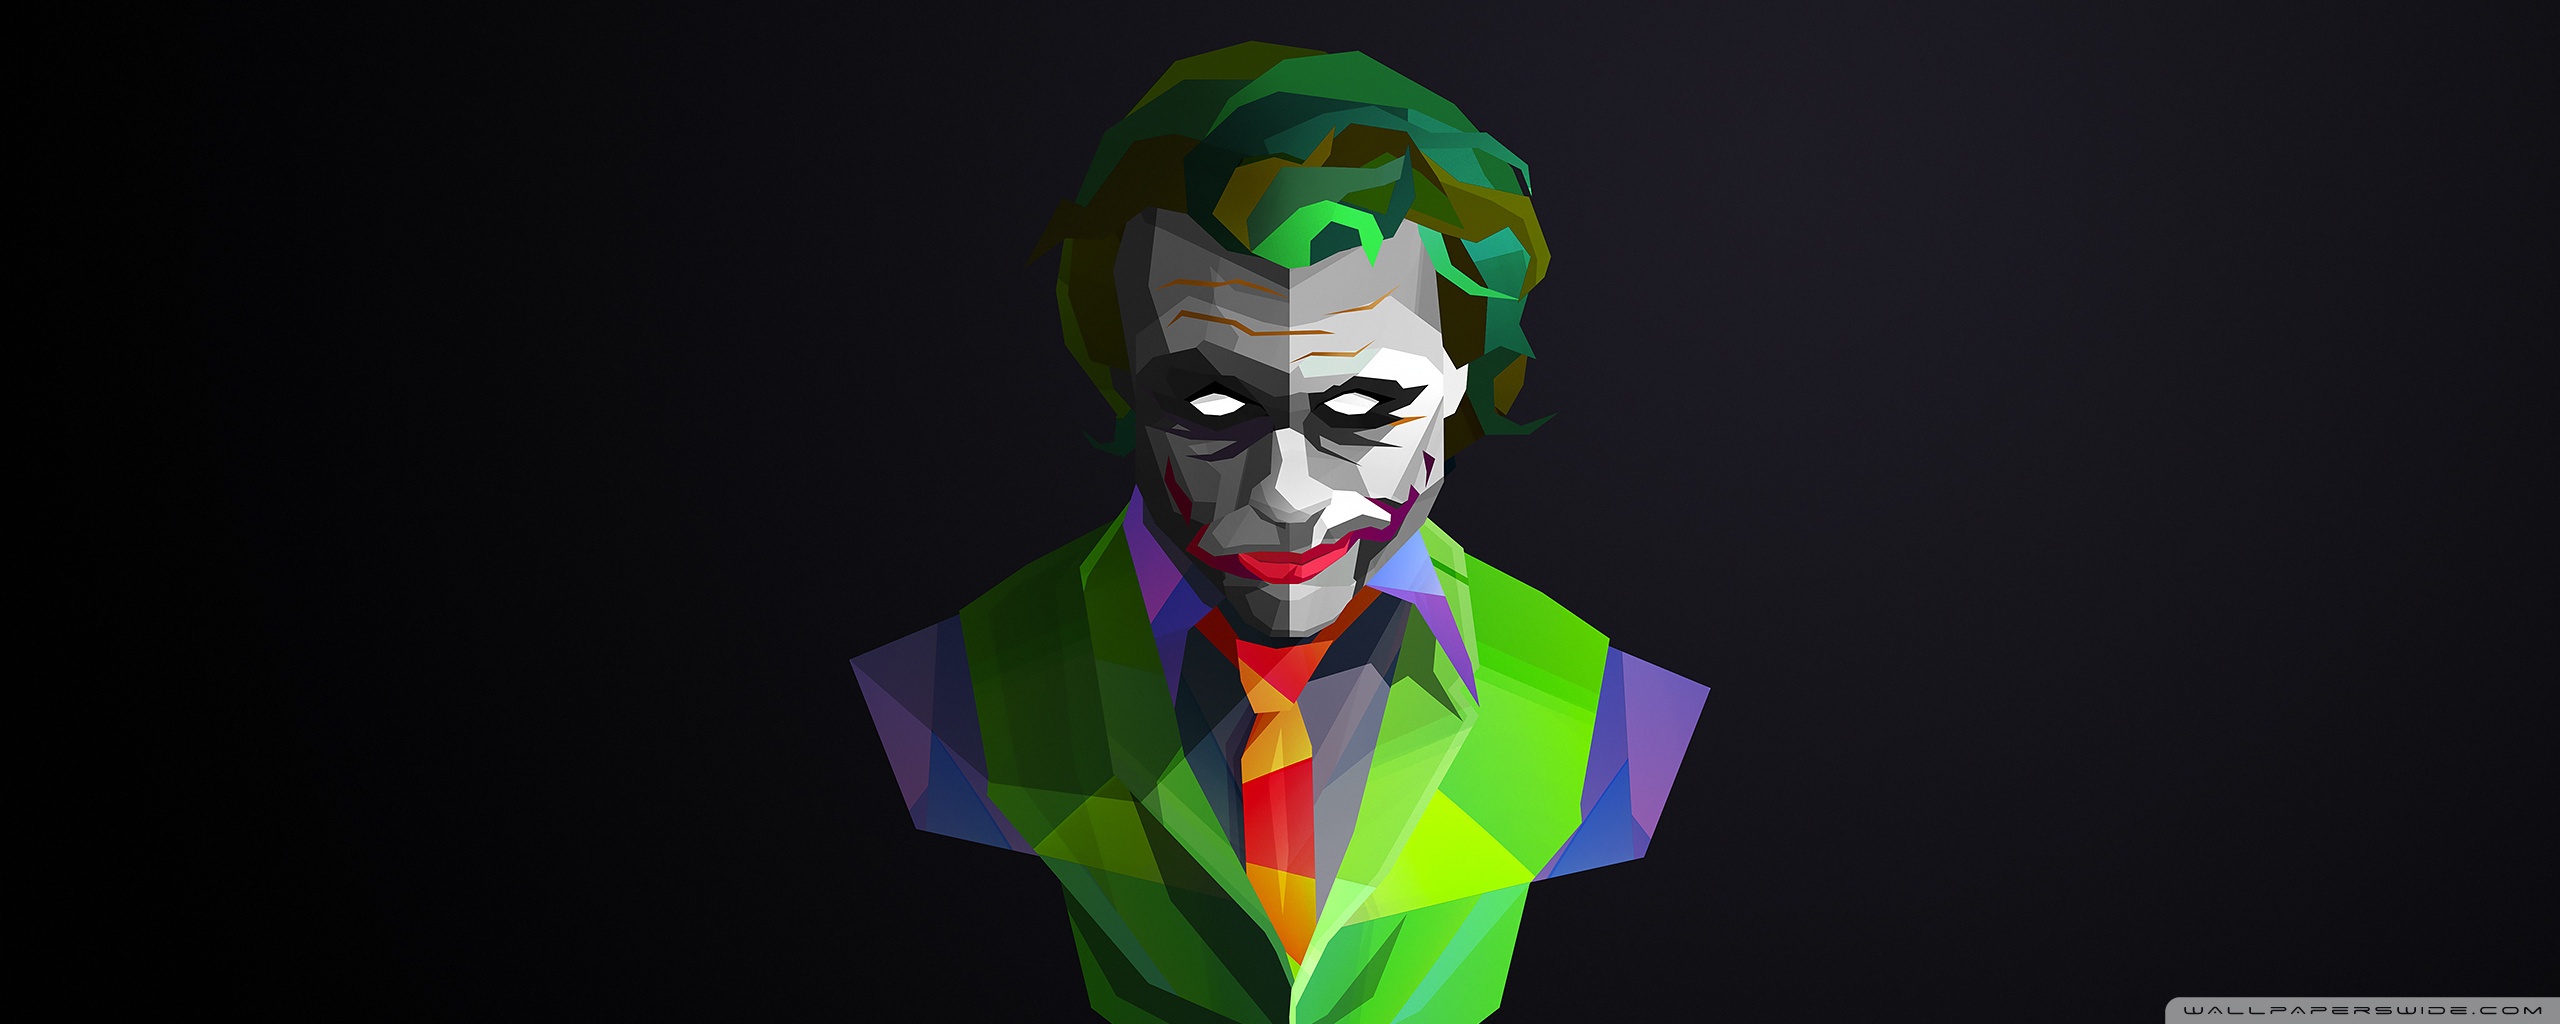 Joker Dual Monitor Wallpapers